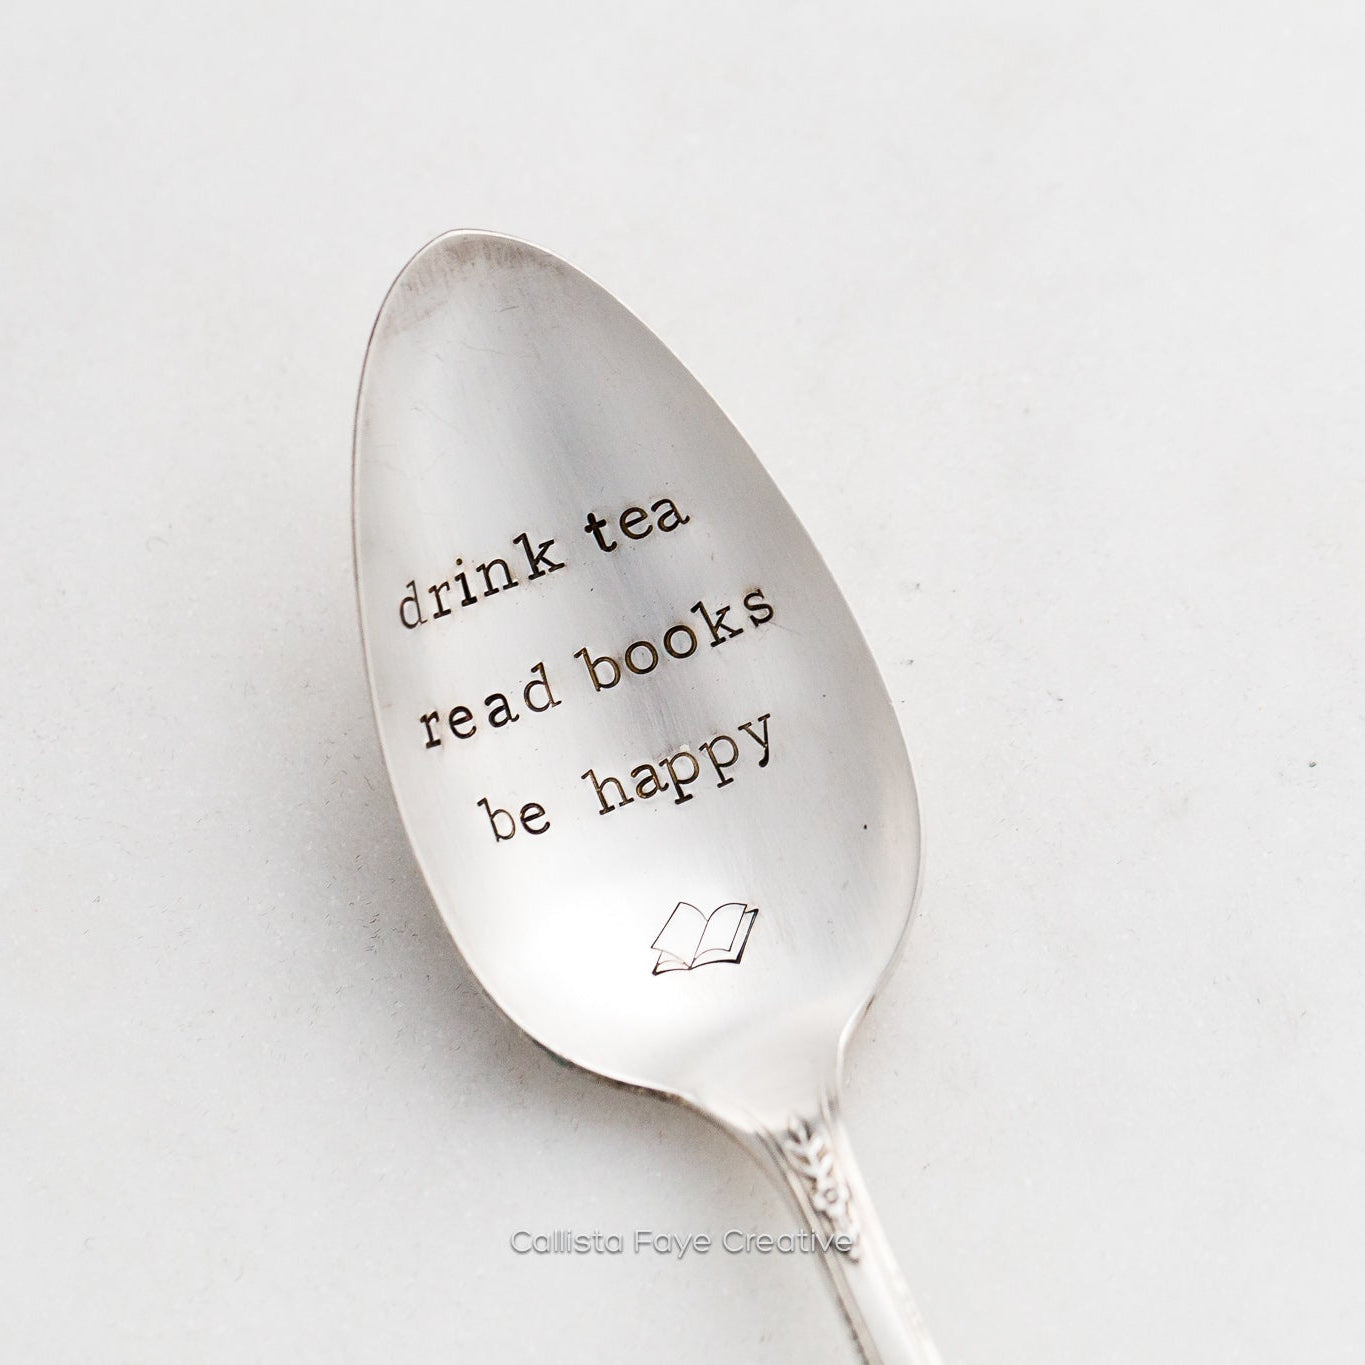 Drink Tea Read Books Be Happy, Hand Stamped Vintage Spoon Spoons callistafaye   